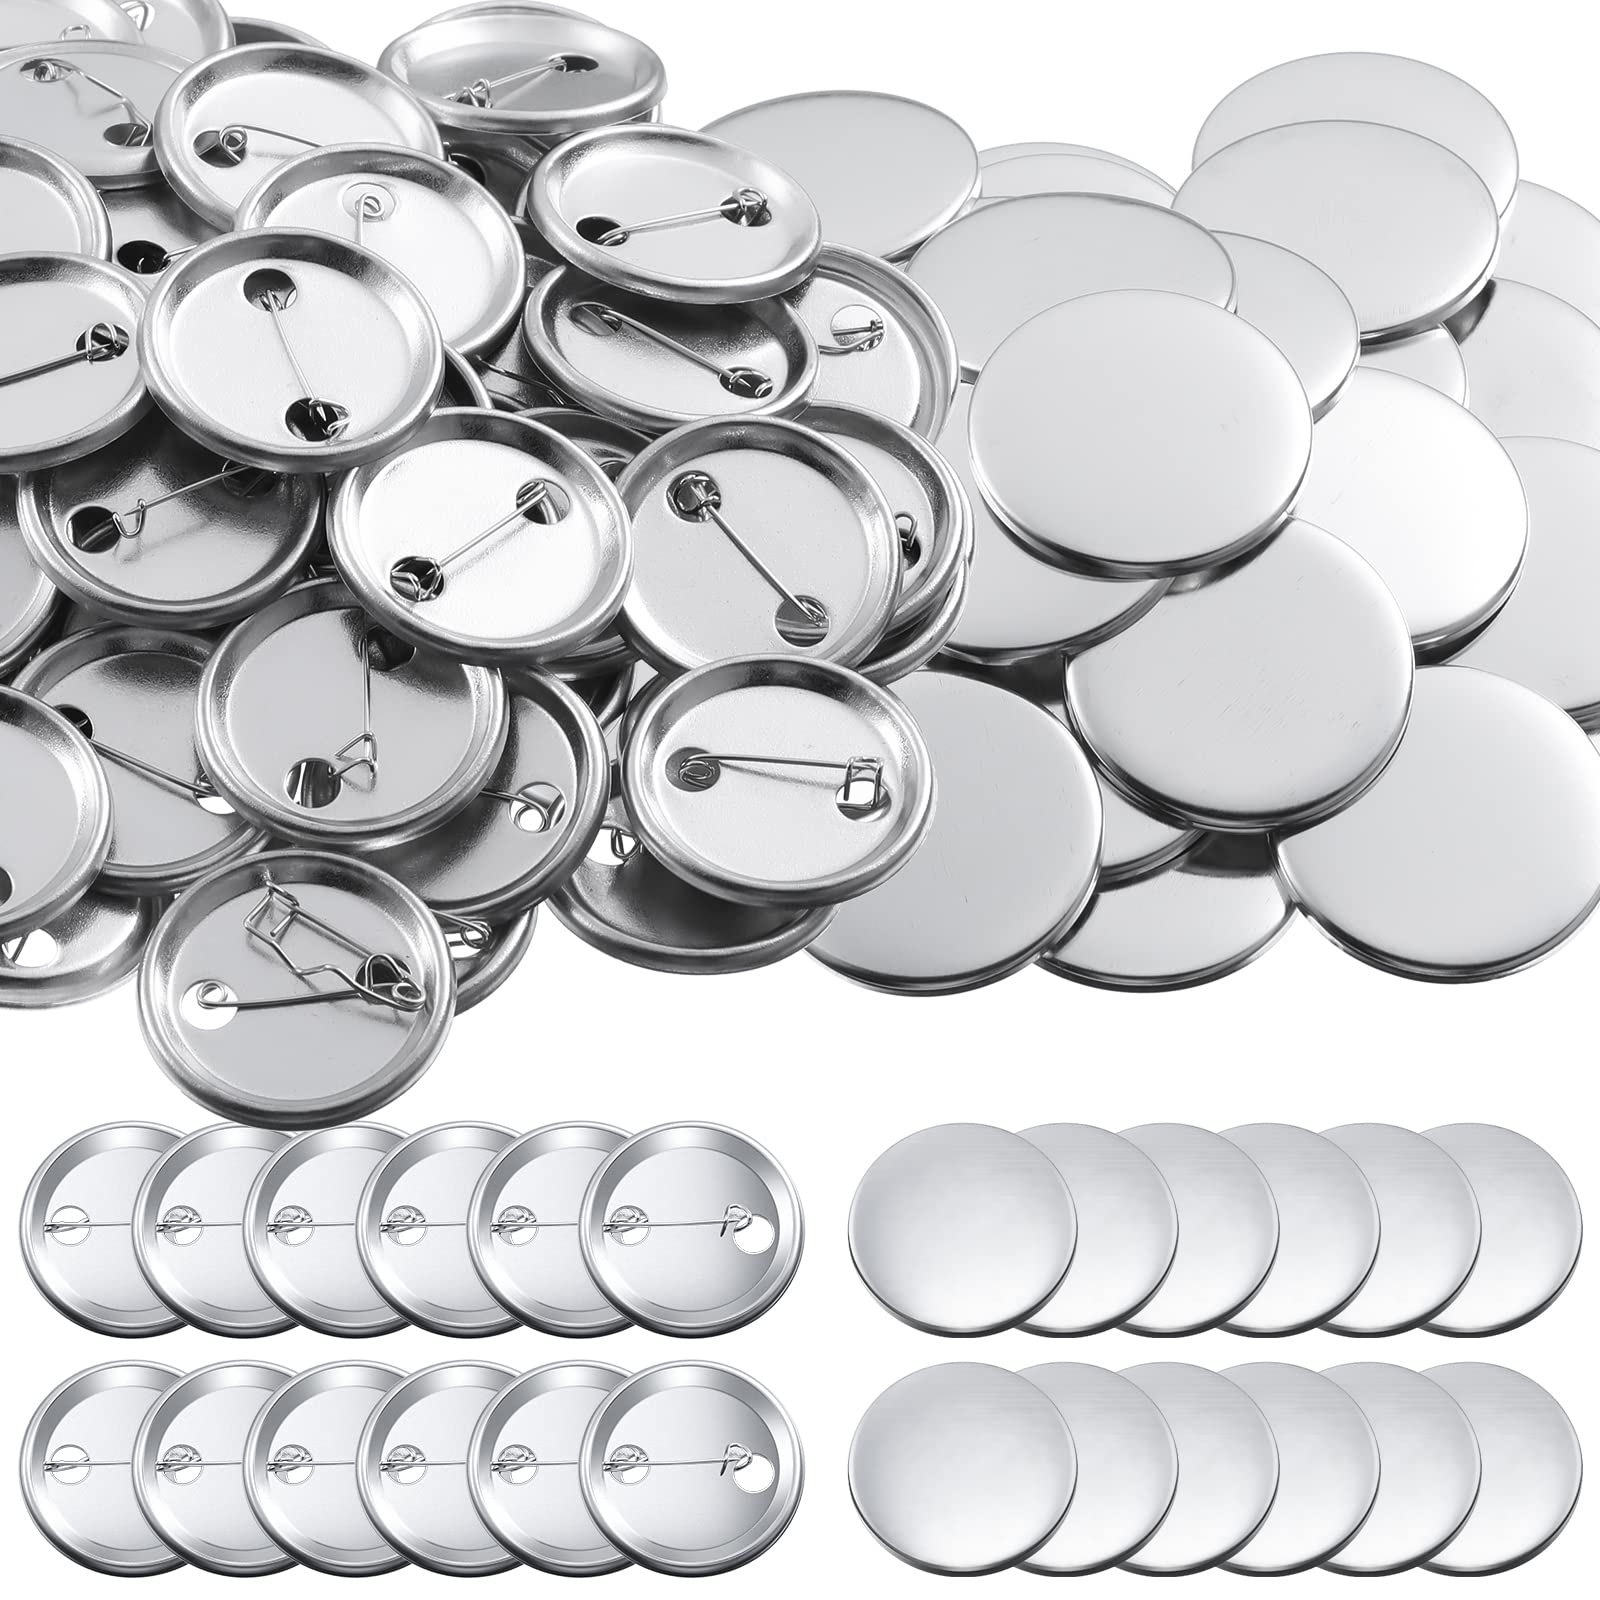 300 Pieces Blank Button Making Supplies Round Badge Button Parts